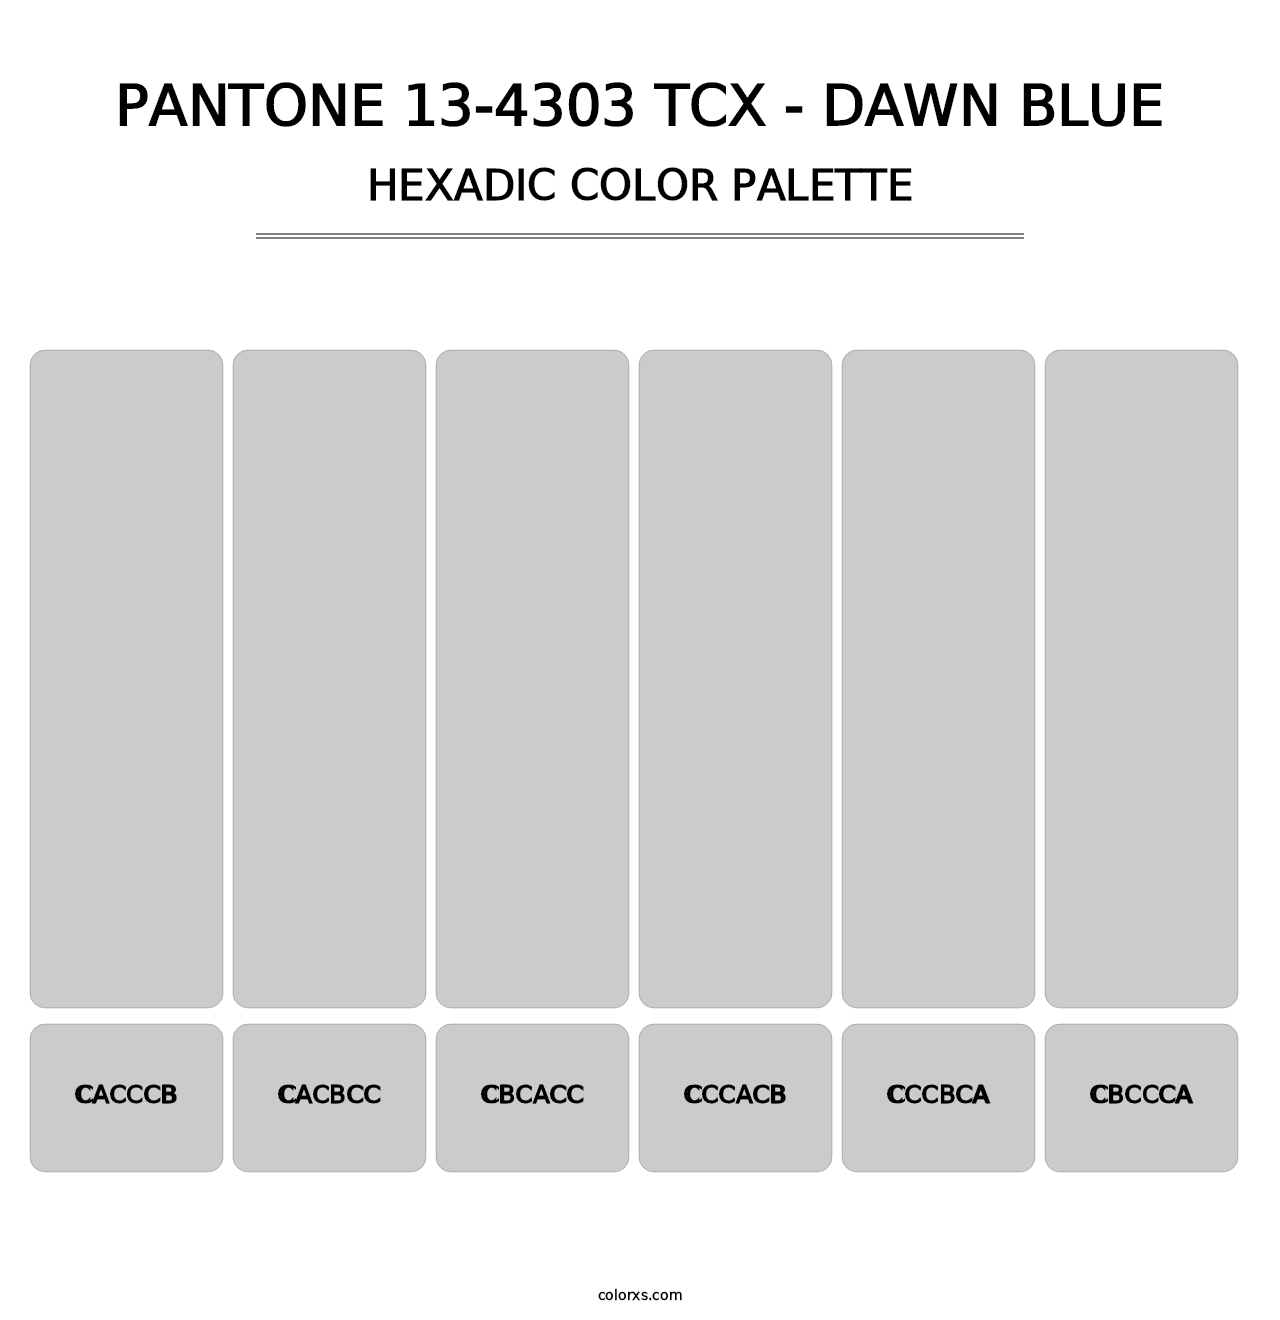 PANTONE 13-4303 TCX - Dawn Blue - Hexadic Color Palette